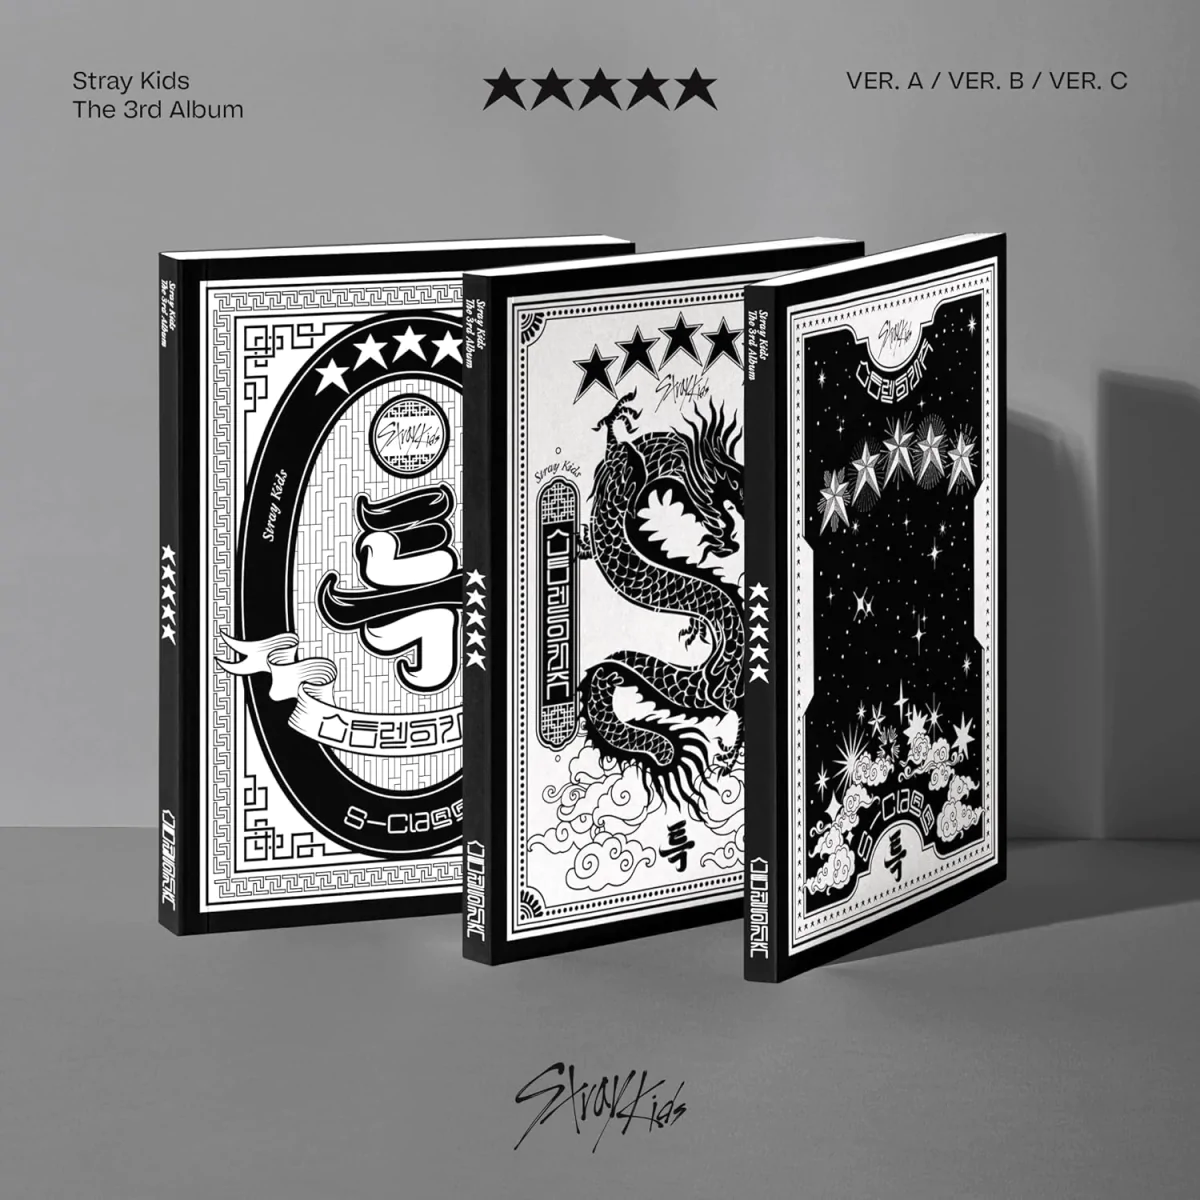 Stray Kids - ★★★★★ (5-STAR, A Version) (3rd Album) 